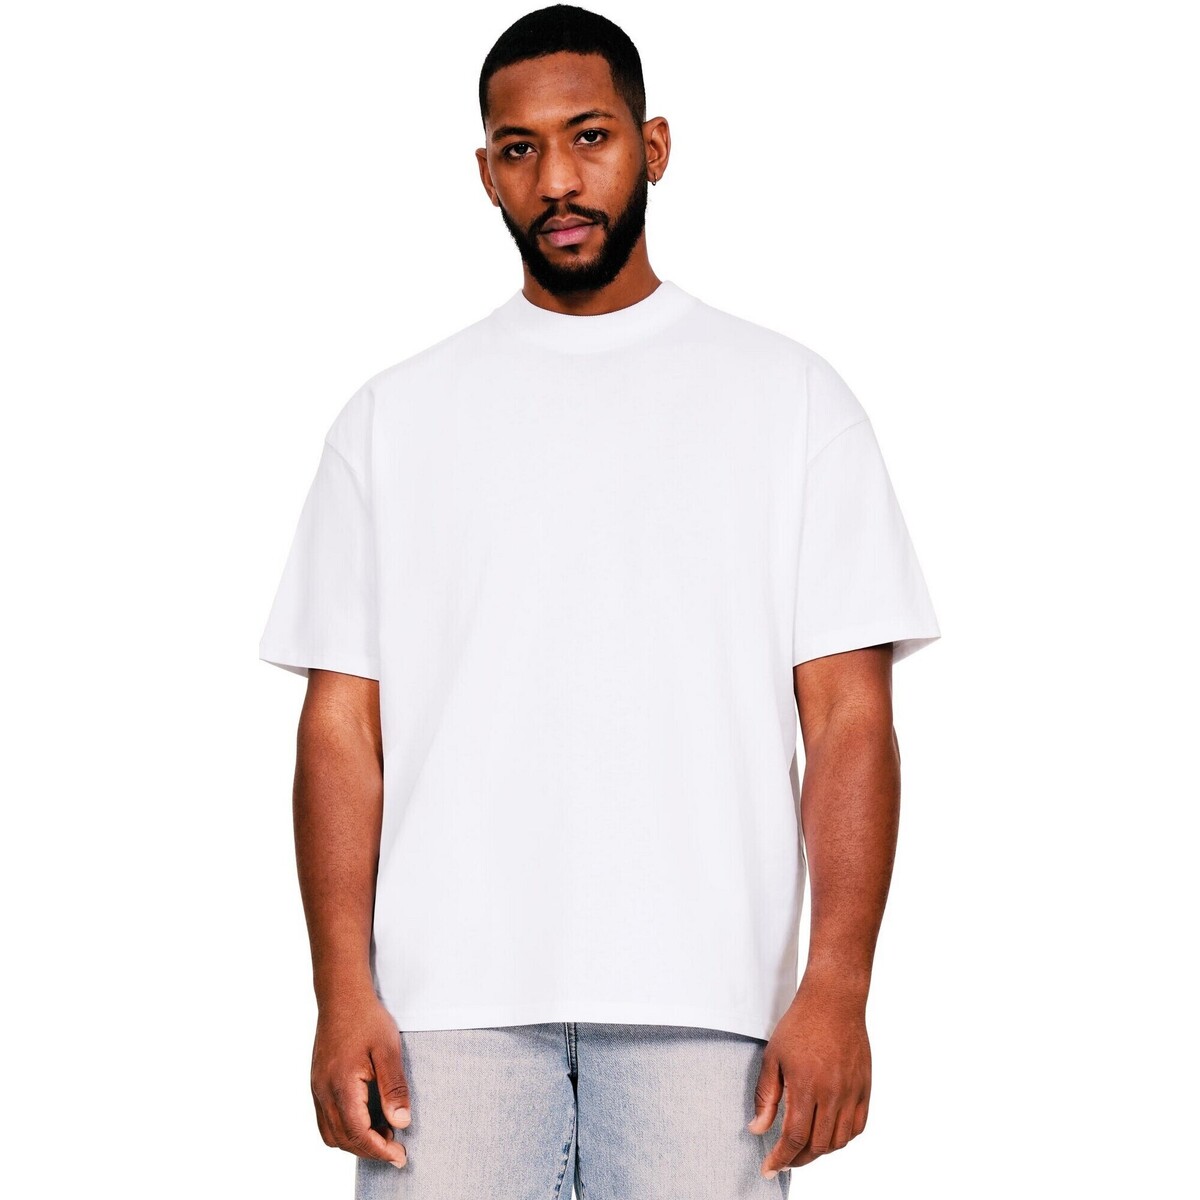 Vêtements Homme T-shirts manches longues Casual Classics AB600 Blanc